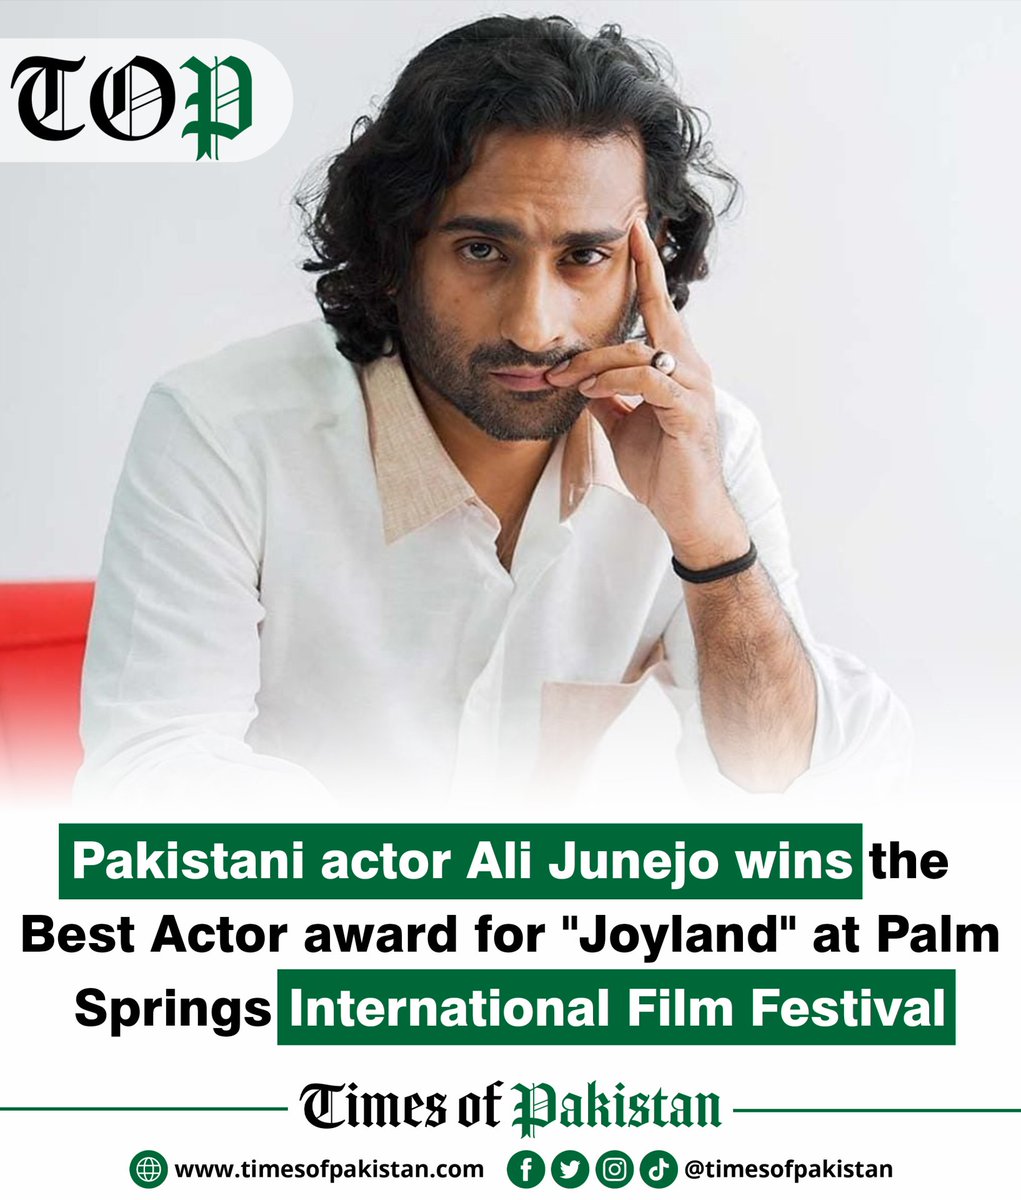 Pakistani actor Ali Junejo wins the Best Actor award for 'Joyland' at Palm Springs International Film Festival

#AliJunejo #Joyland #PSIFF #PakistaniActors #ShowbizNews #PakistaniMovies #TimesofPakistan #PakistanNews #LatestNews #BreakingNews #LatestPakistanNews #PakNews